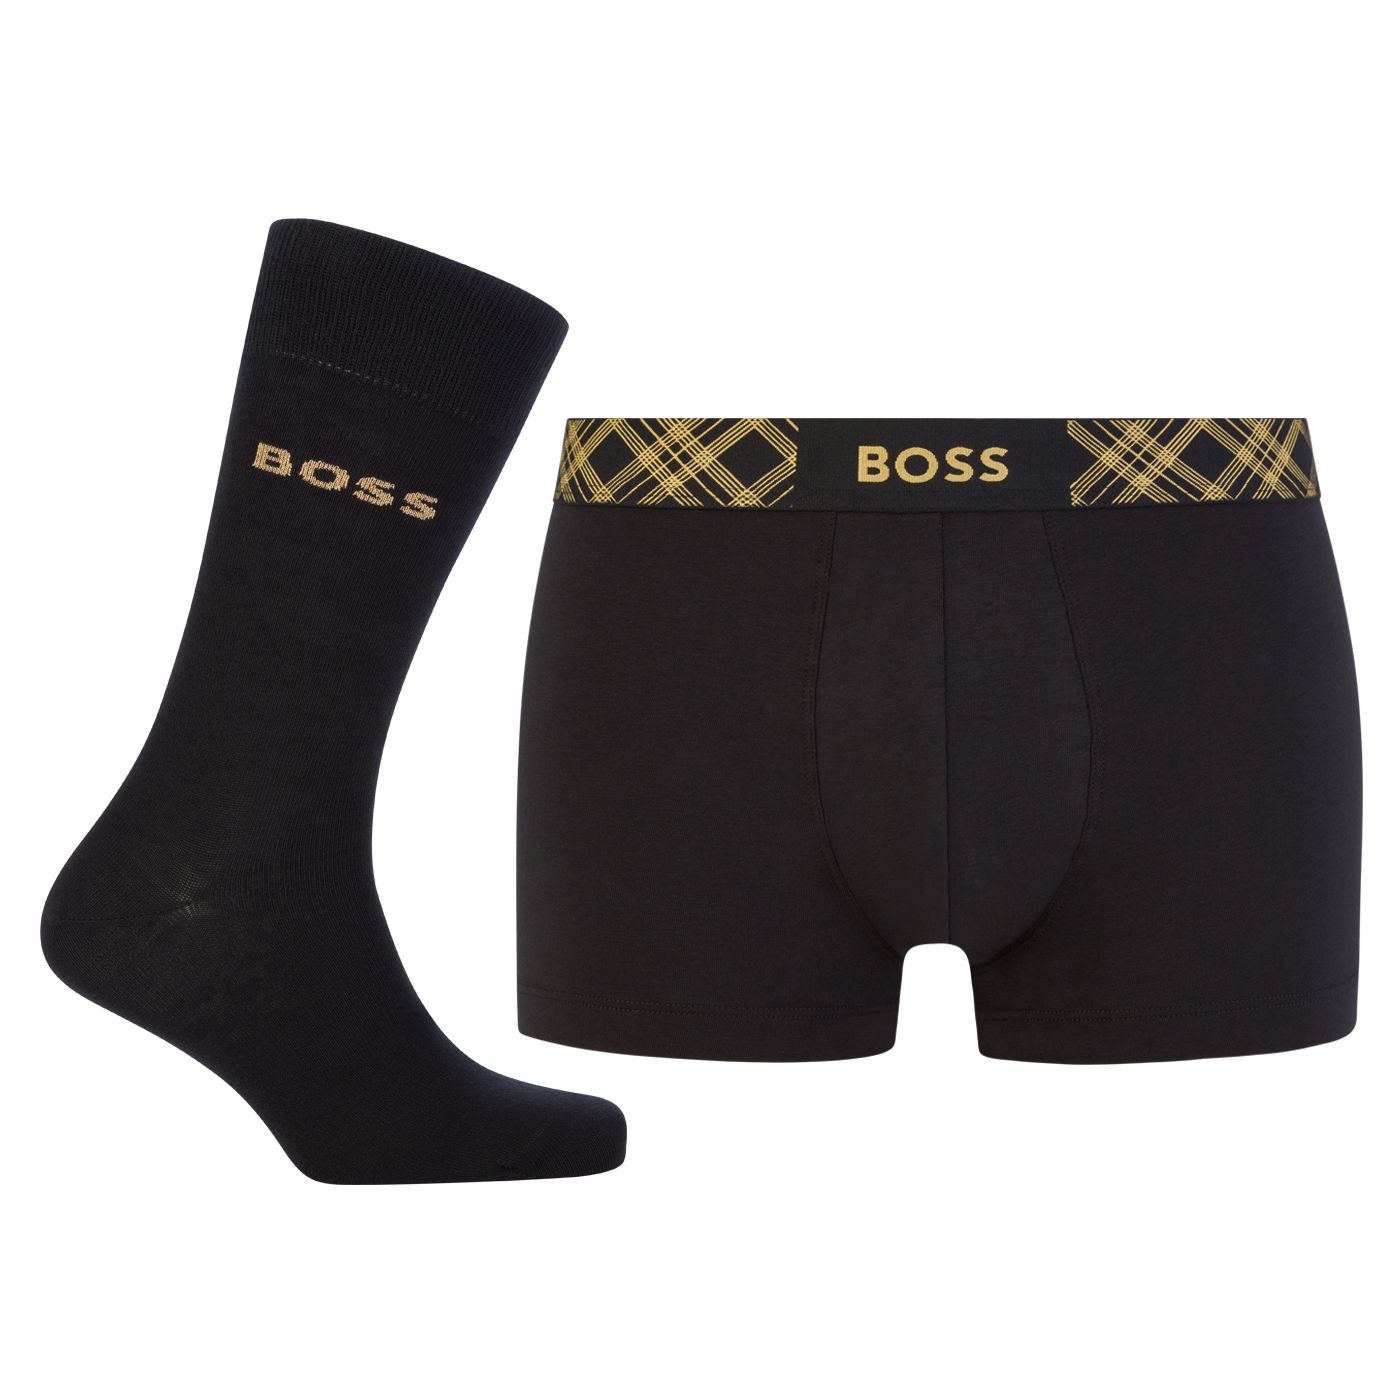 Hugo Boss Pánská sada - boxerky a ponožky BOSS 50500374-001 M